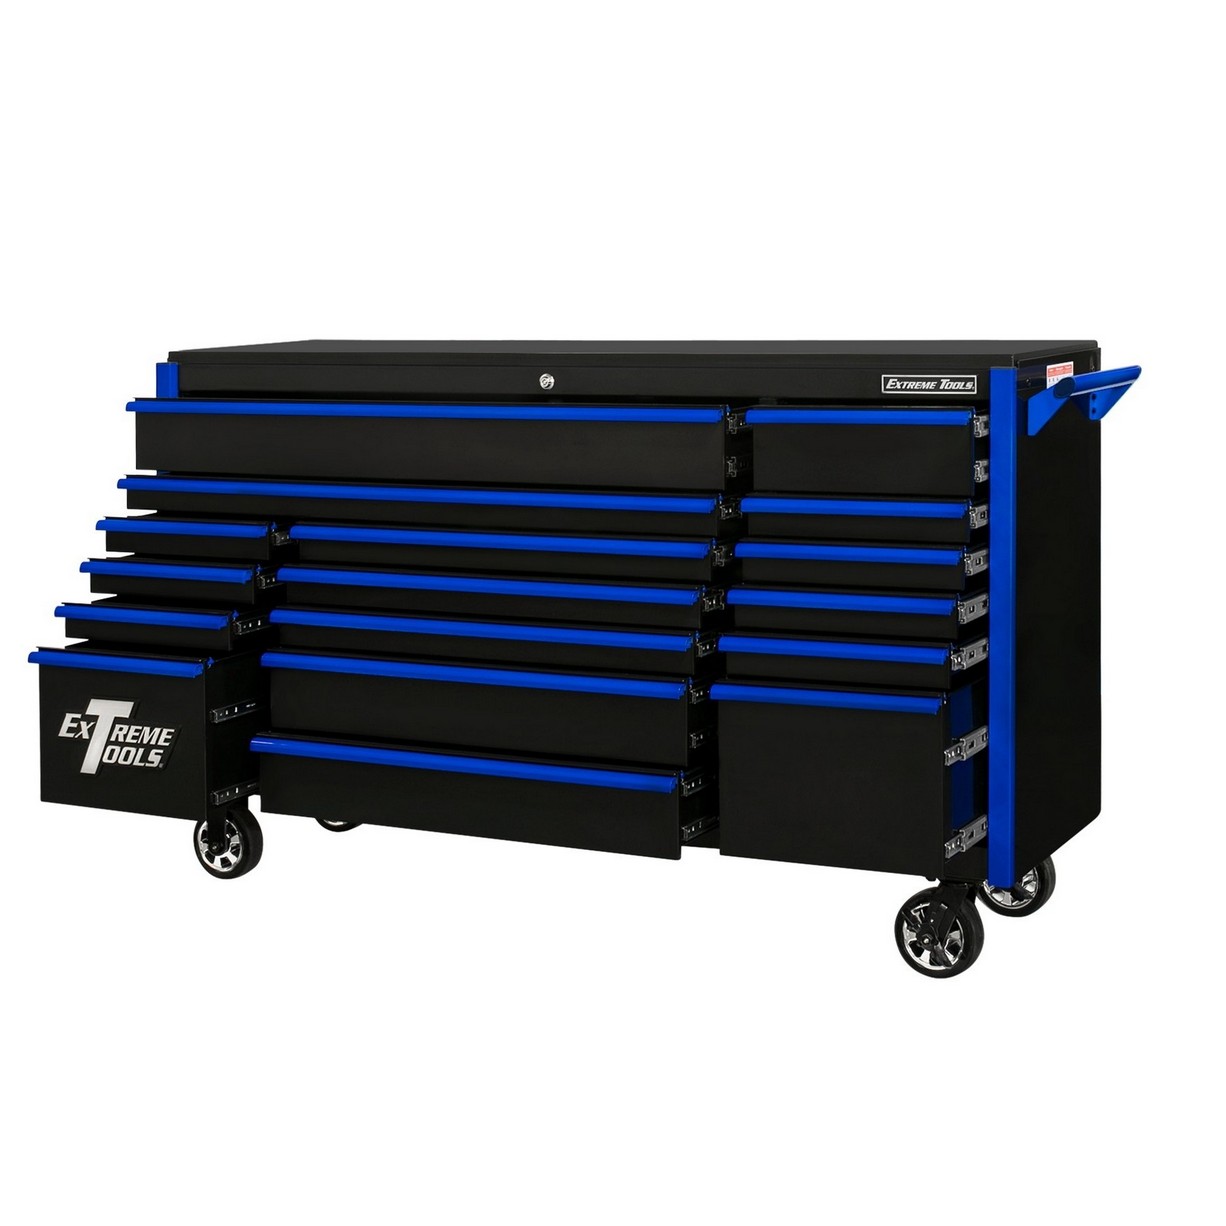 Extreme Tools 72 DX Series 17-Drawer Roller Cabinet - Black w/Blue Drawer Pulls